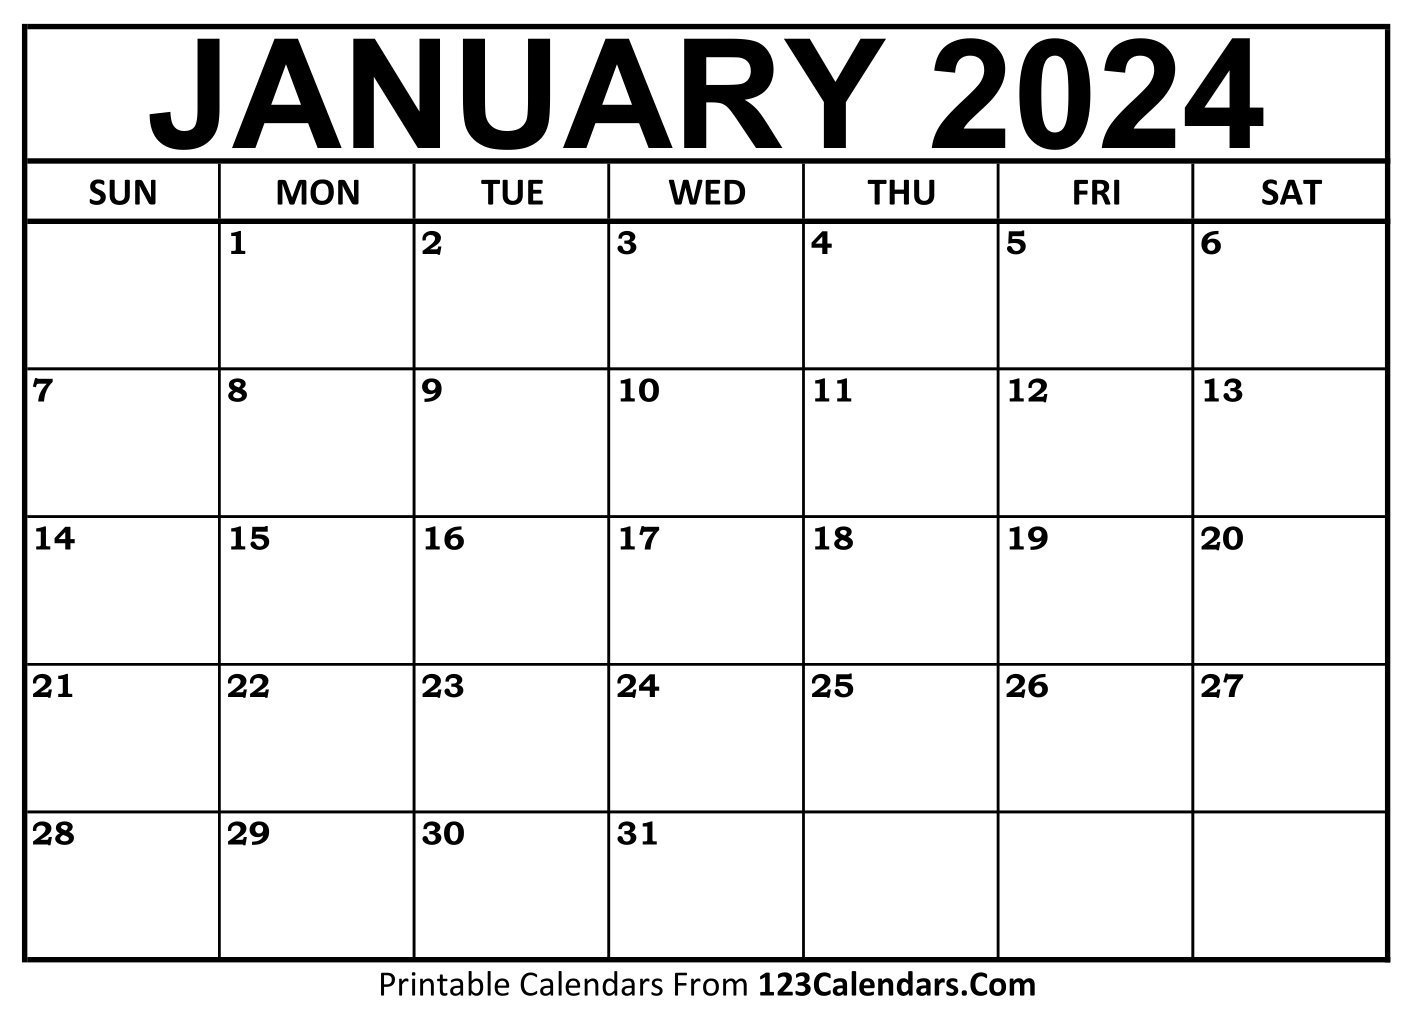 Printable January 2024 Calendar Templates - 123Calendars | Blank 2024 Calendar Printable